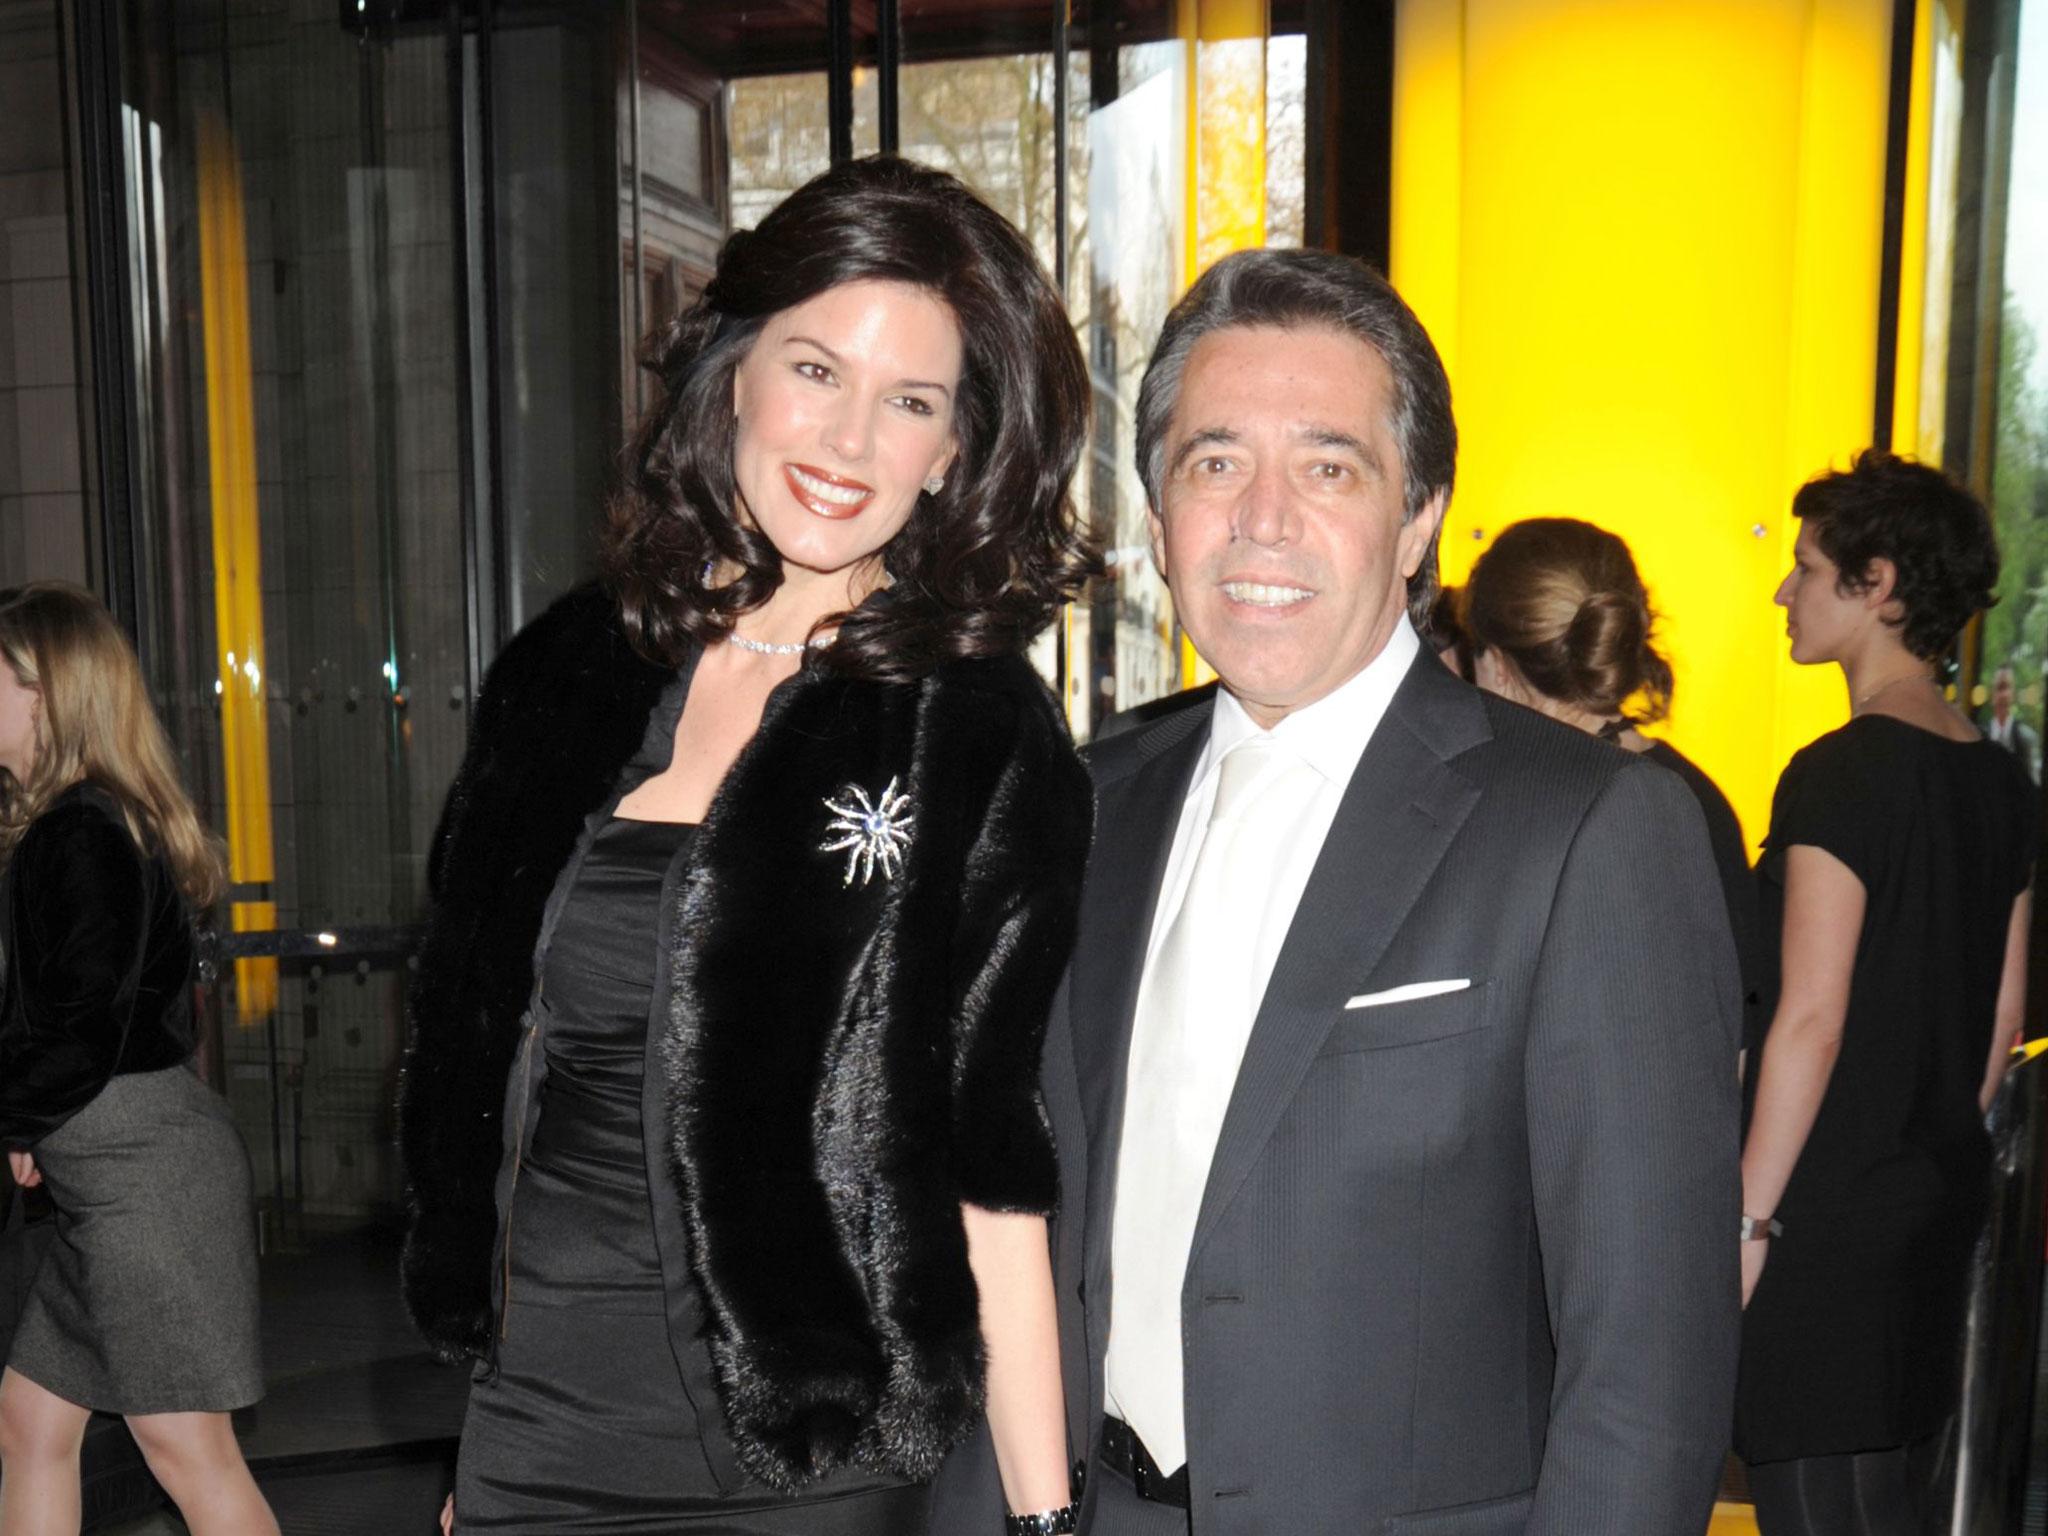 Former Pirelli model Christina Estrada with her former husband, Saudi billionaire Walid Juffali, in 2010